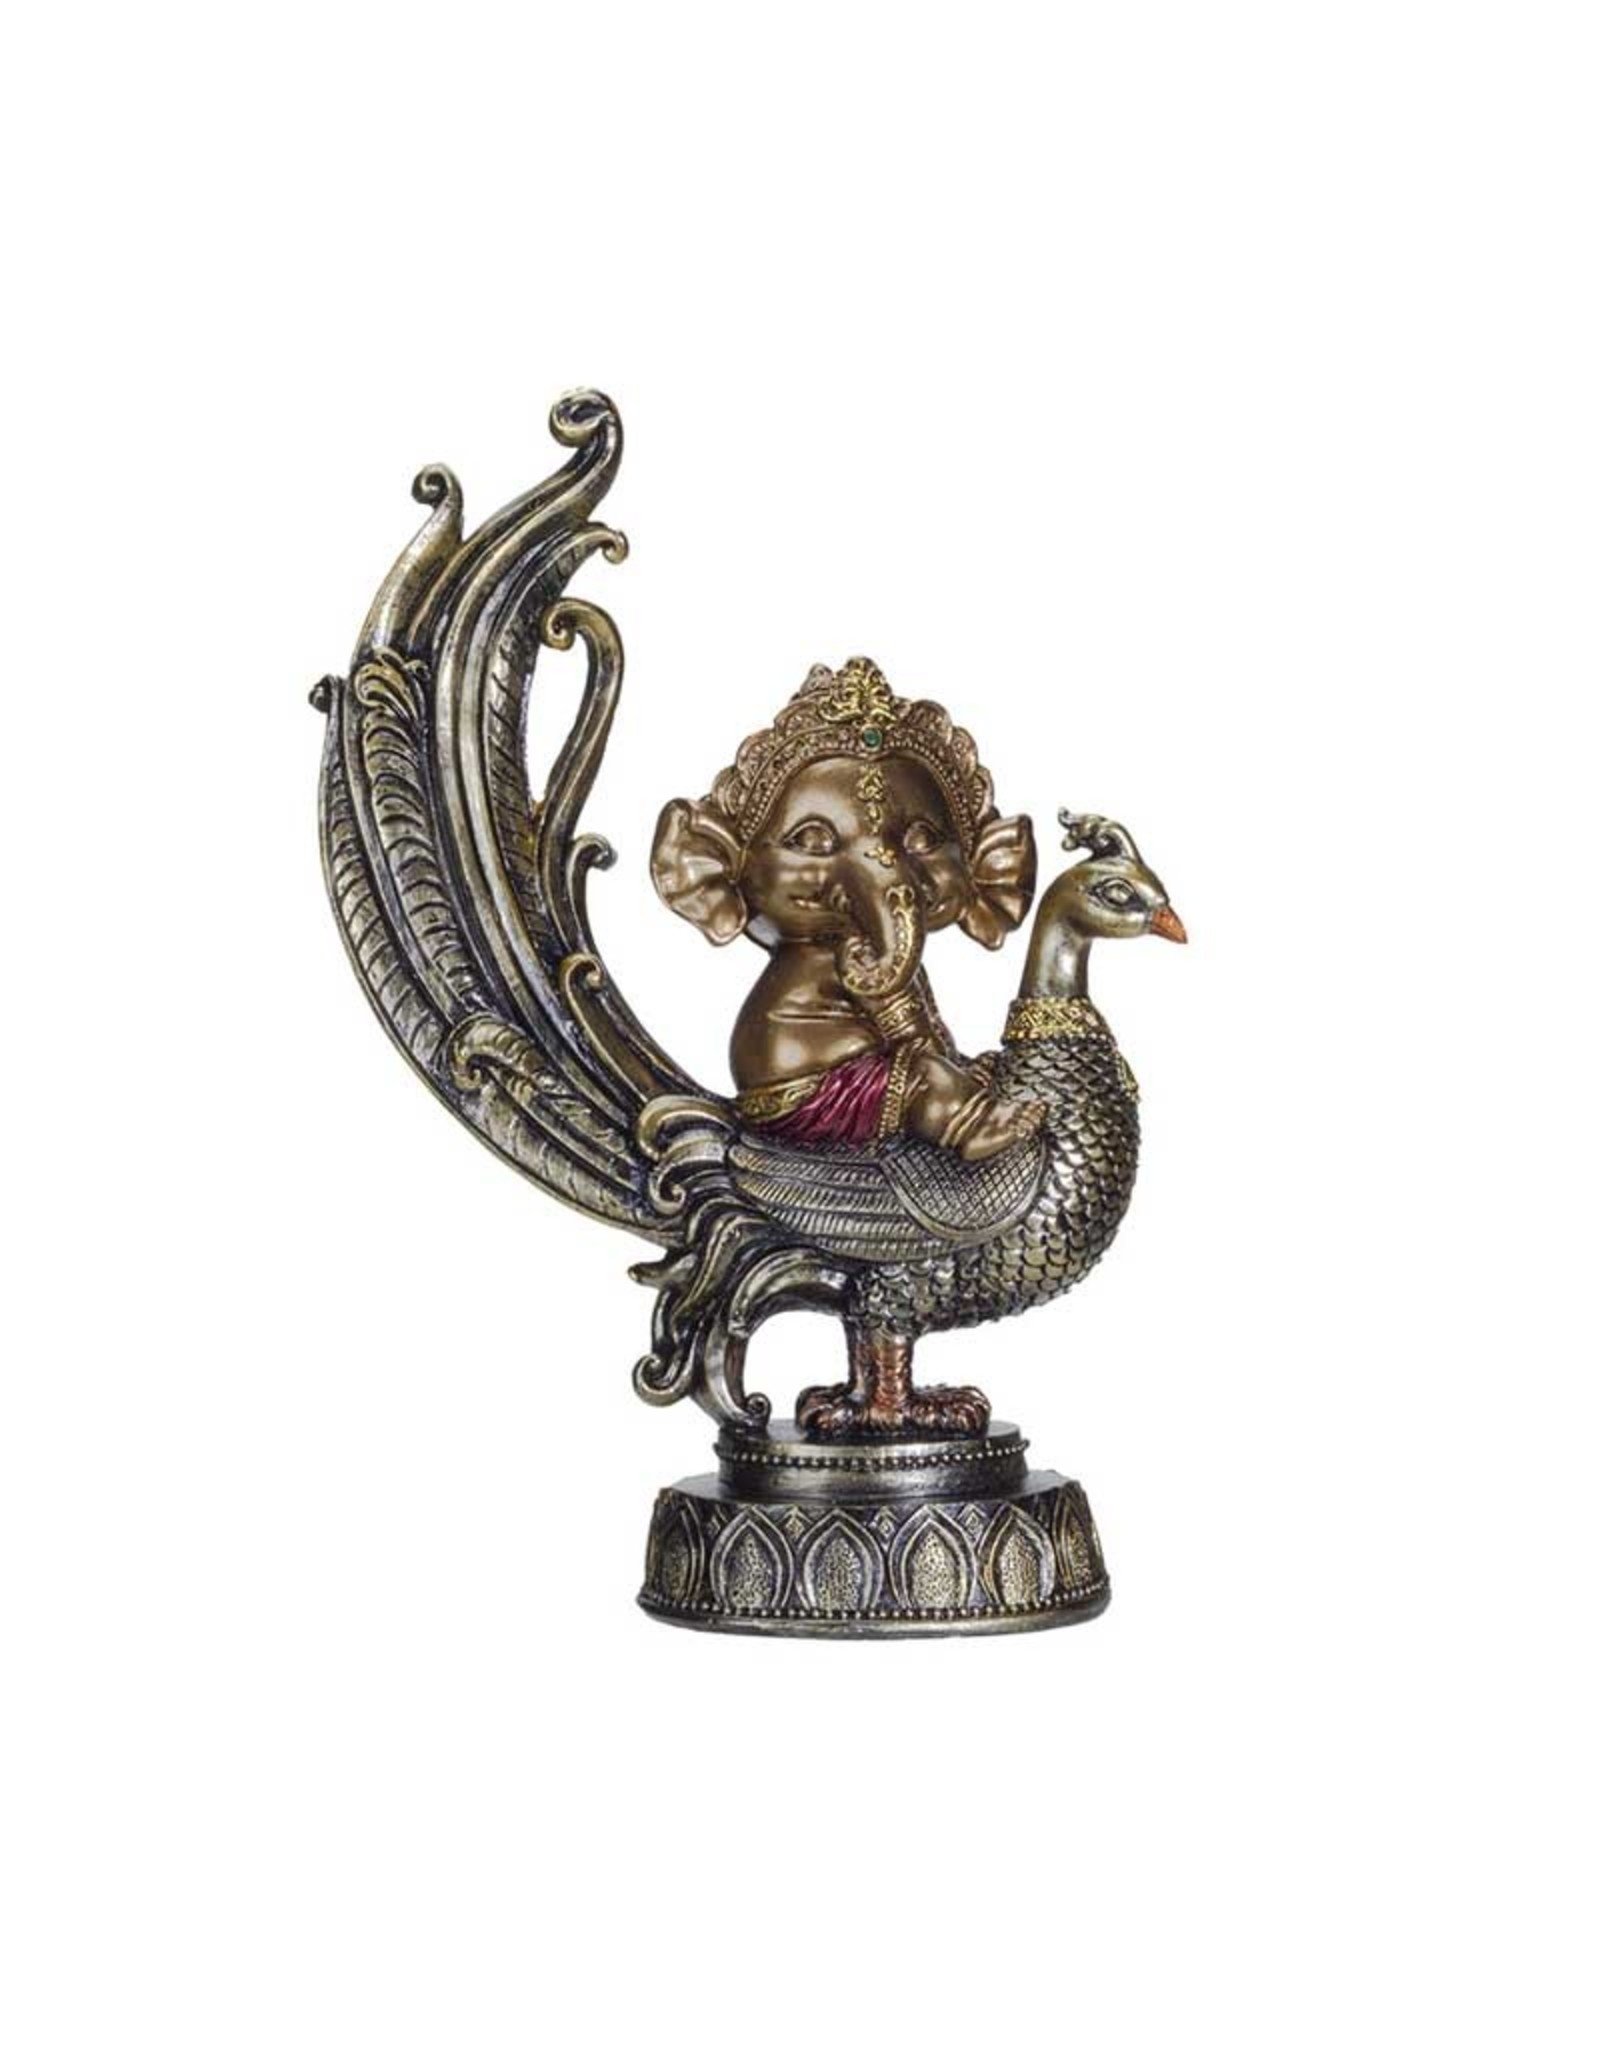 Pacific Trading Ganesha on Peacock Statue - 3" x 7" x 9.5"